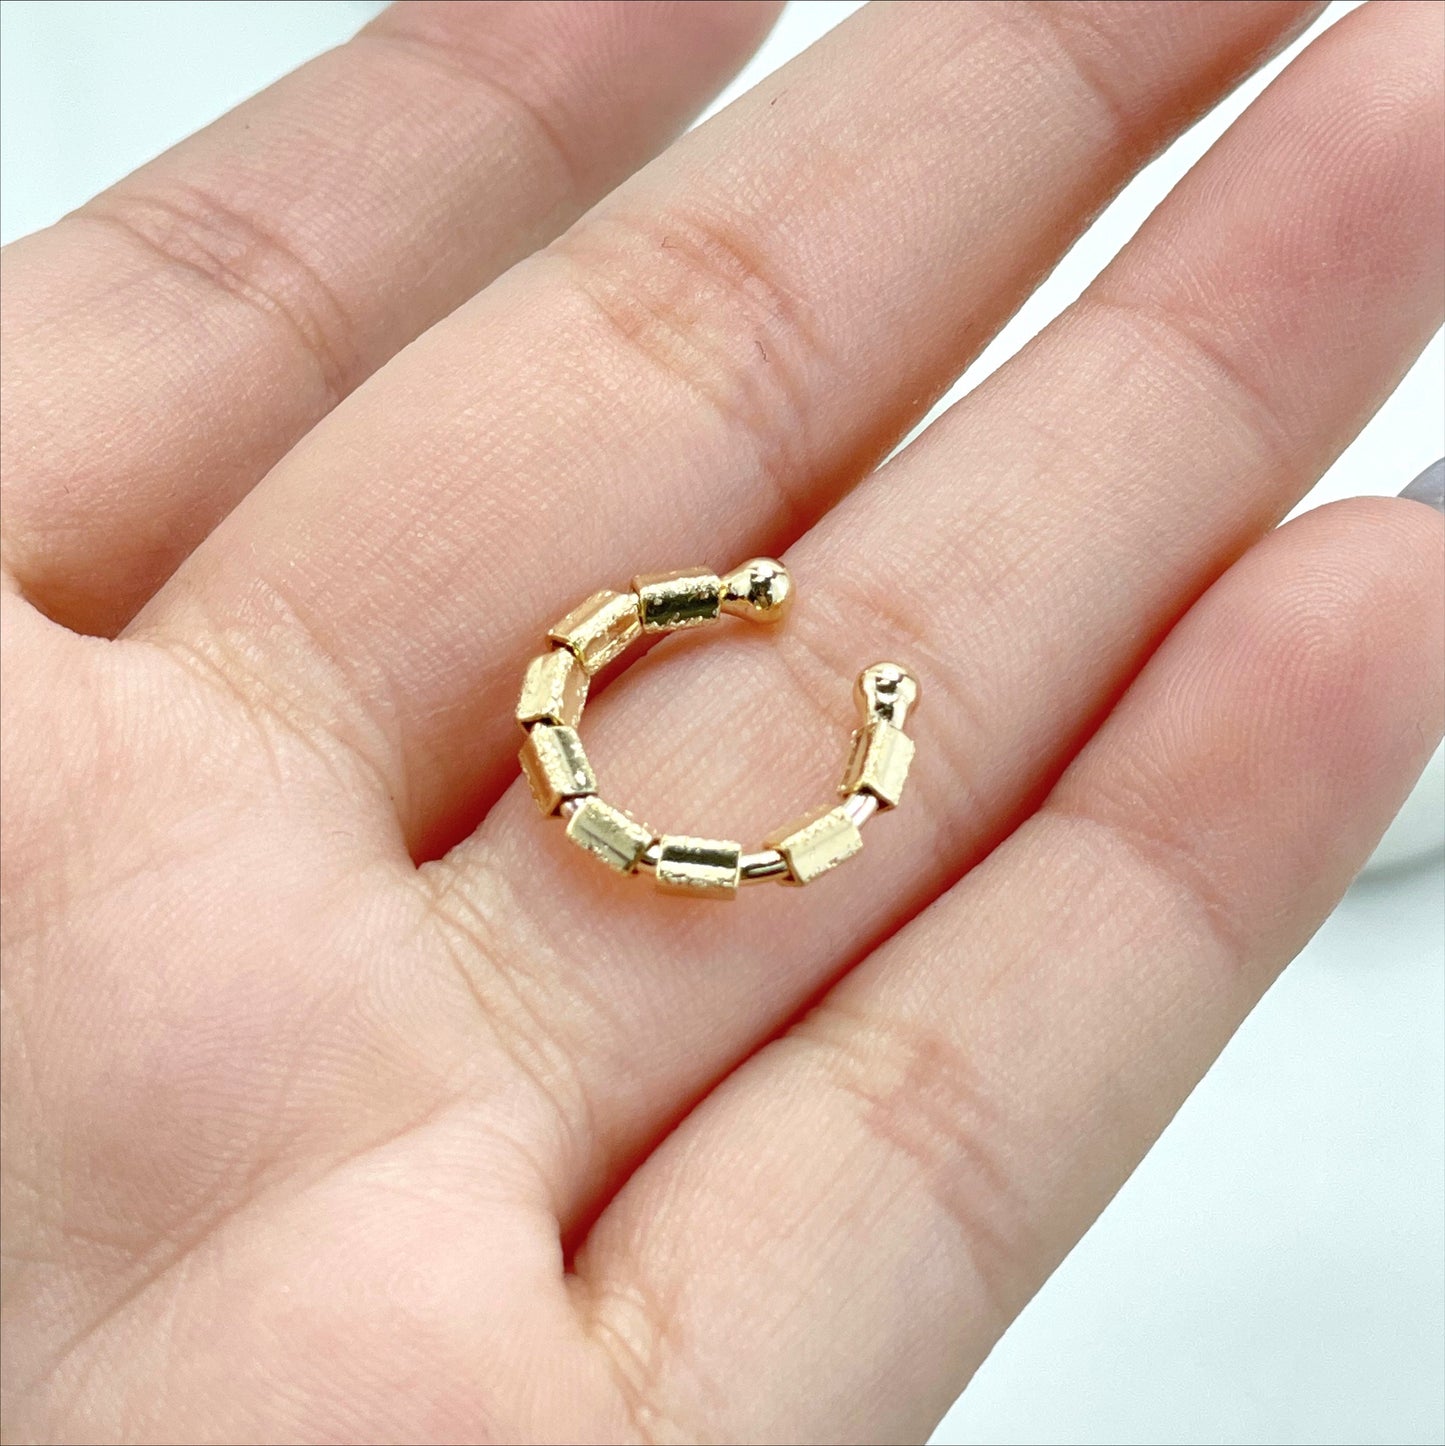 18k Gold Filled Dainty Minimalist Tiny Ear Huggies' Cuff Earring Wholesale Jewelry Supplies